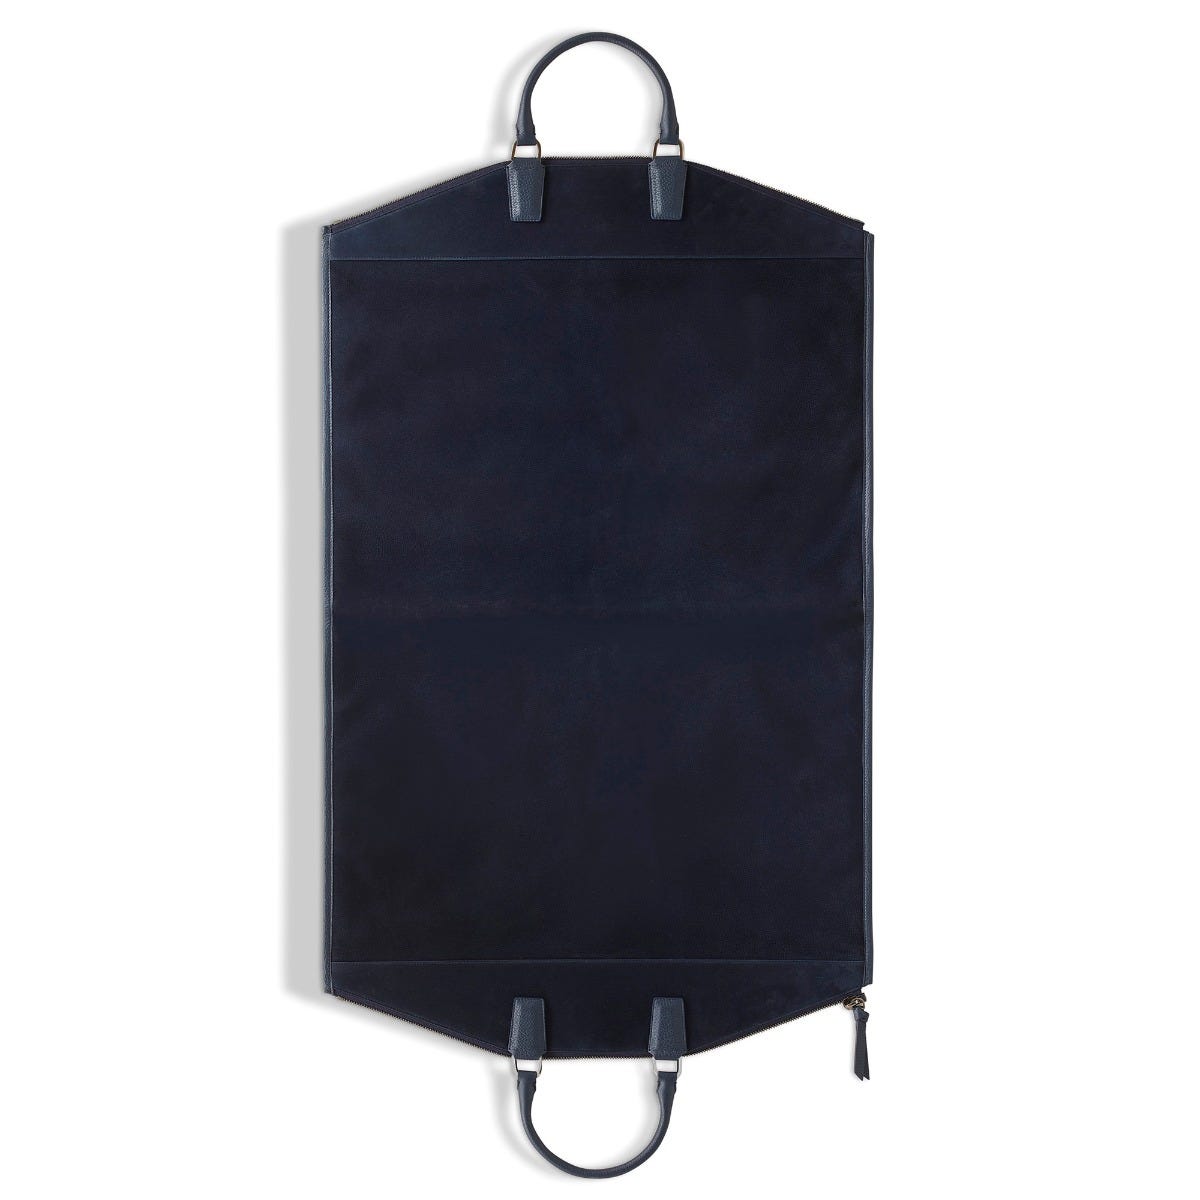 GMT Suit Bag in Soft Grain Leather & Nubuck